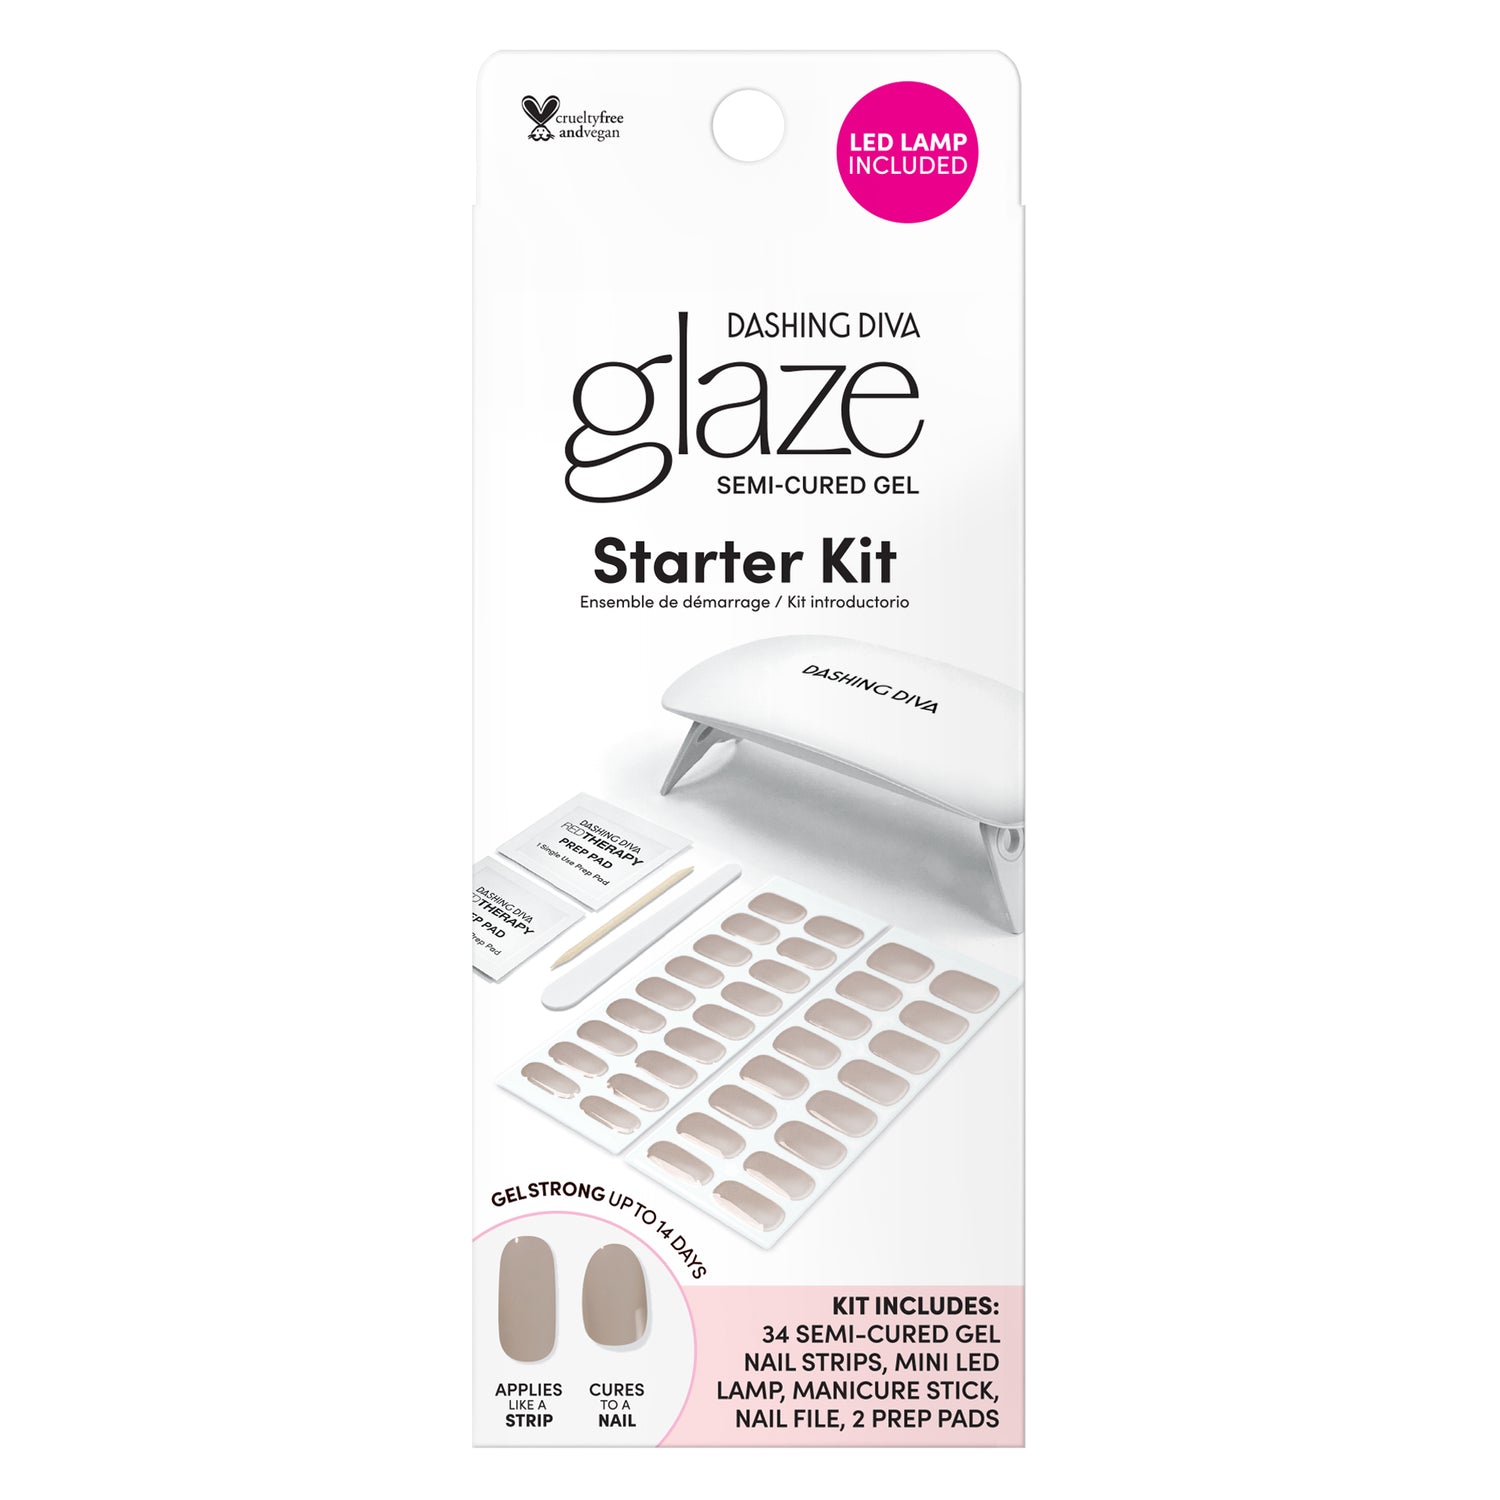 Dashing Diva GLAZE grey semi cured gel strips starter kit. LED mini lamp included.